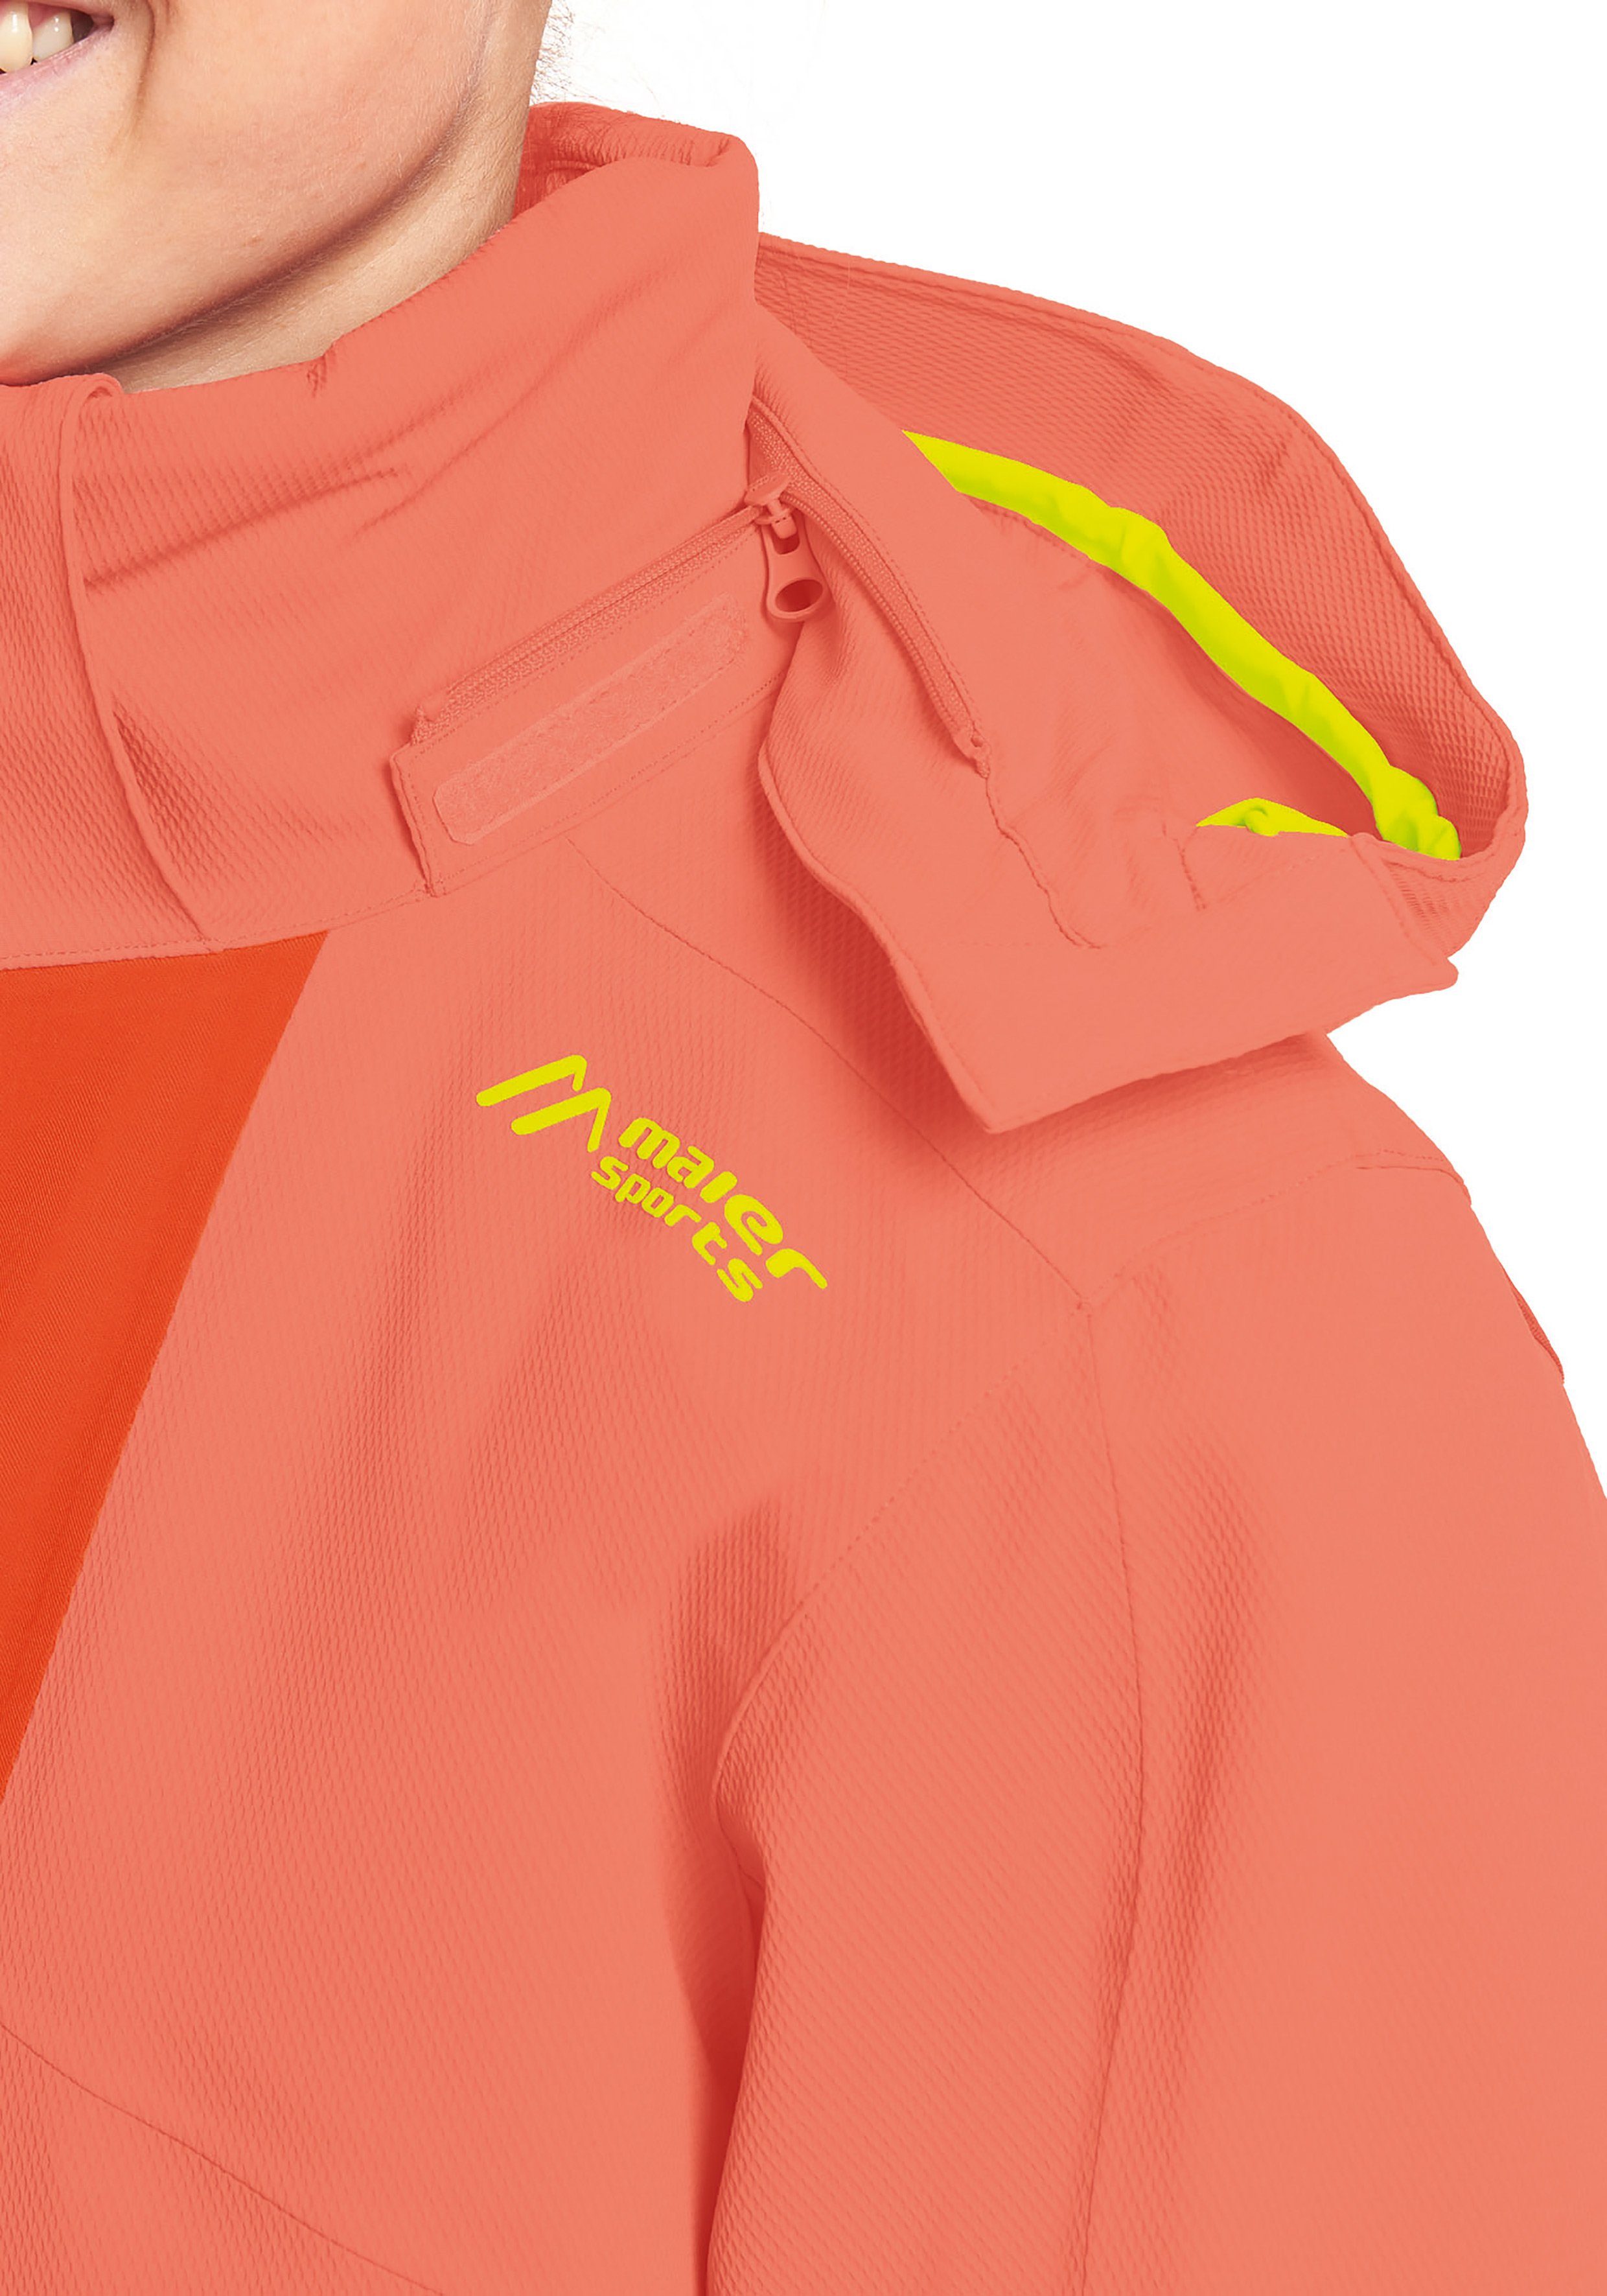 Freeride – Skijacke W perfekt Piste Maier orangerot Sports designte für Skijacke Impulse Fast Modern und